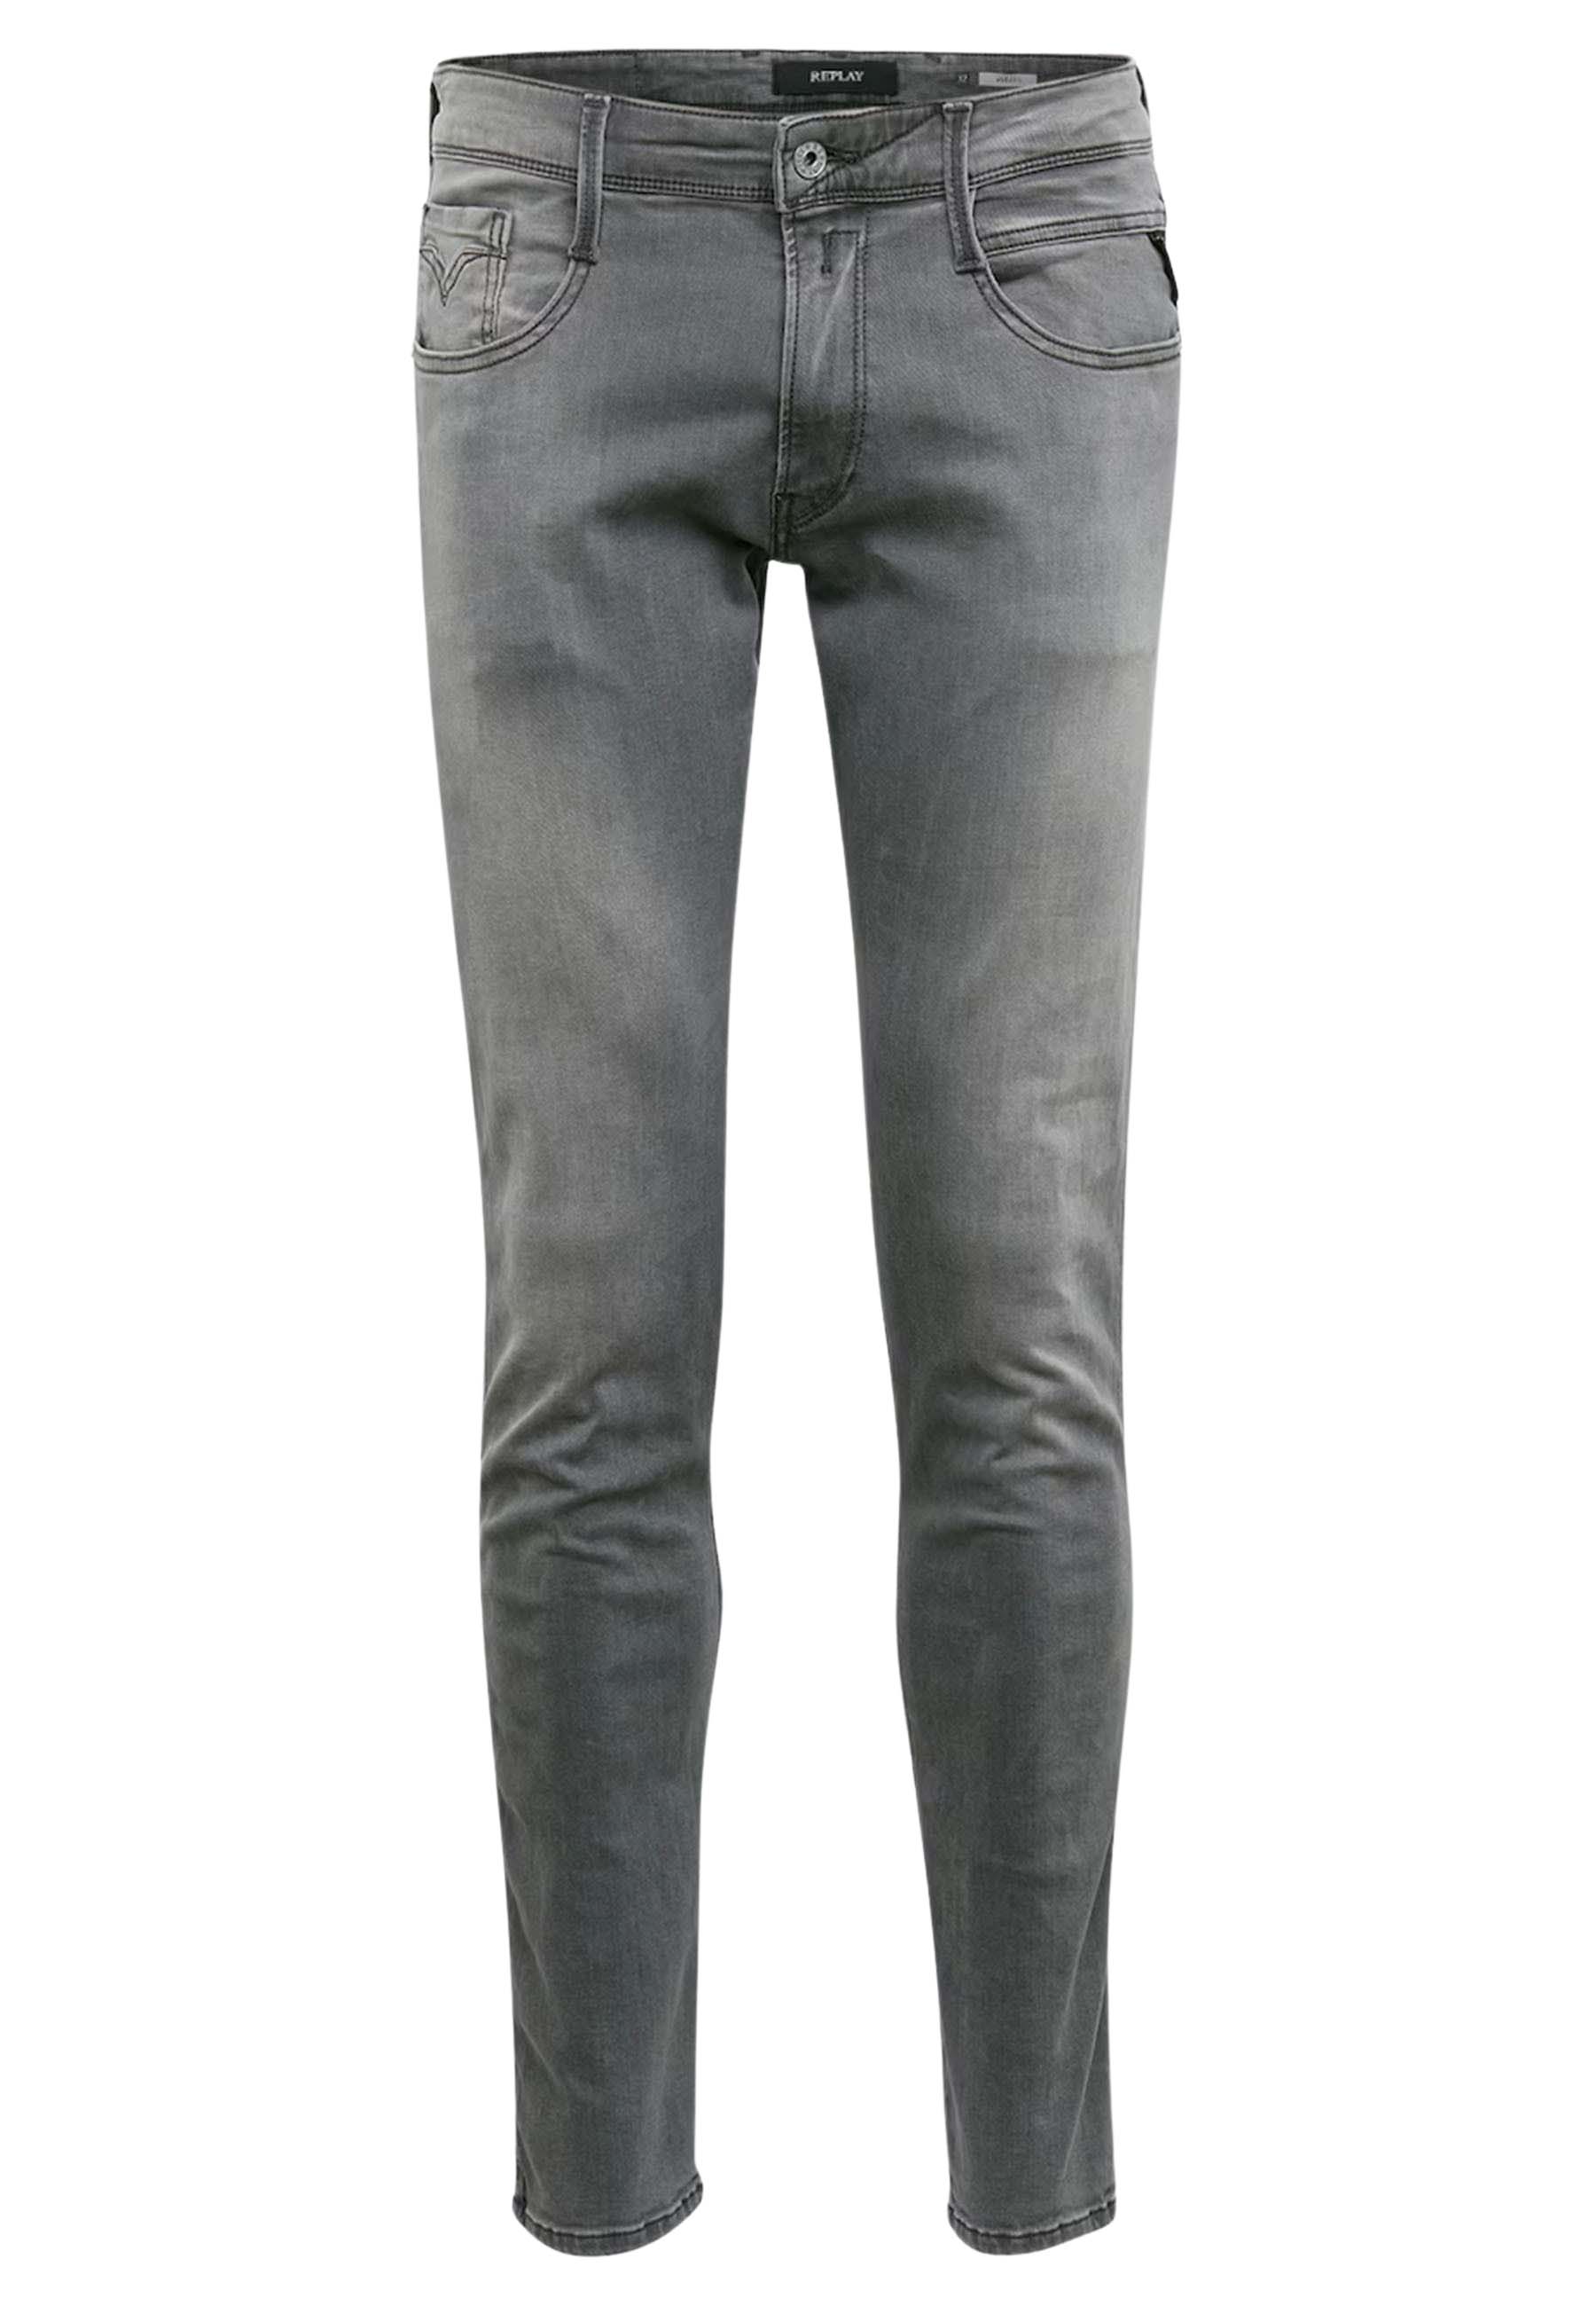 Replay Anbass jeans grijs Heren maat 30/32